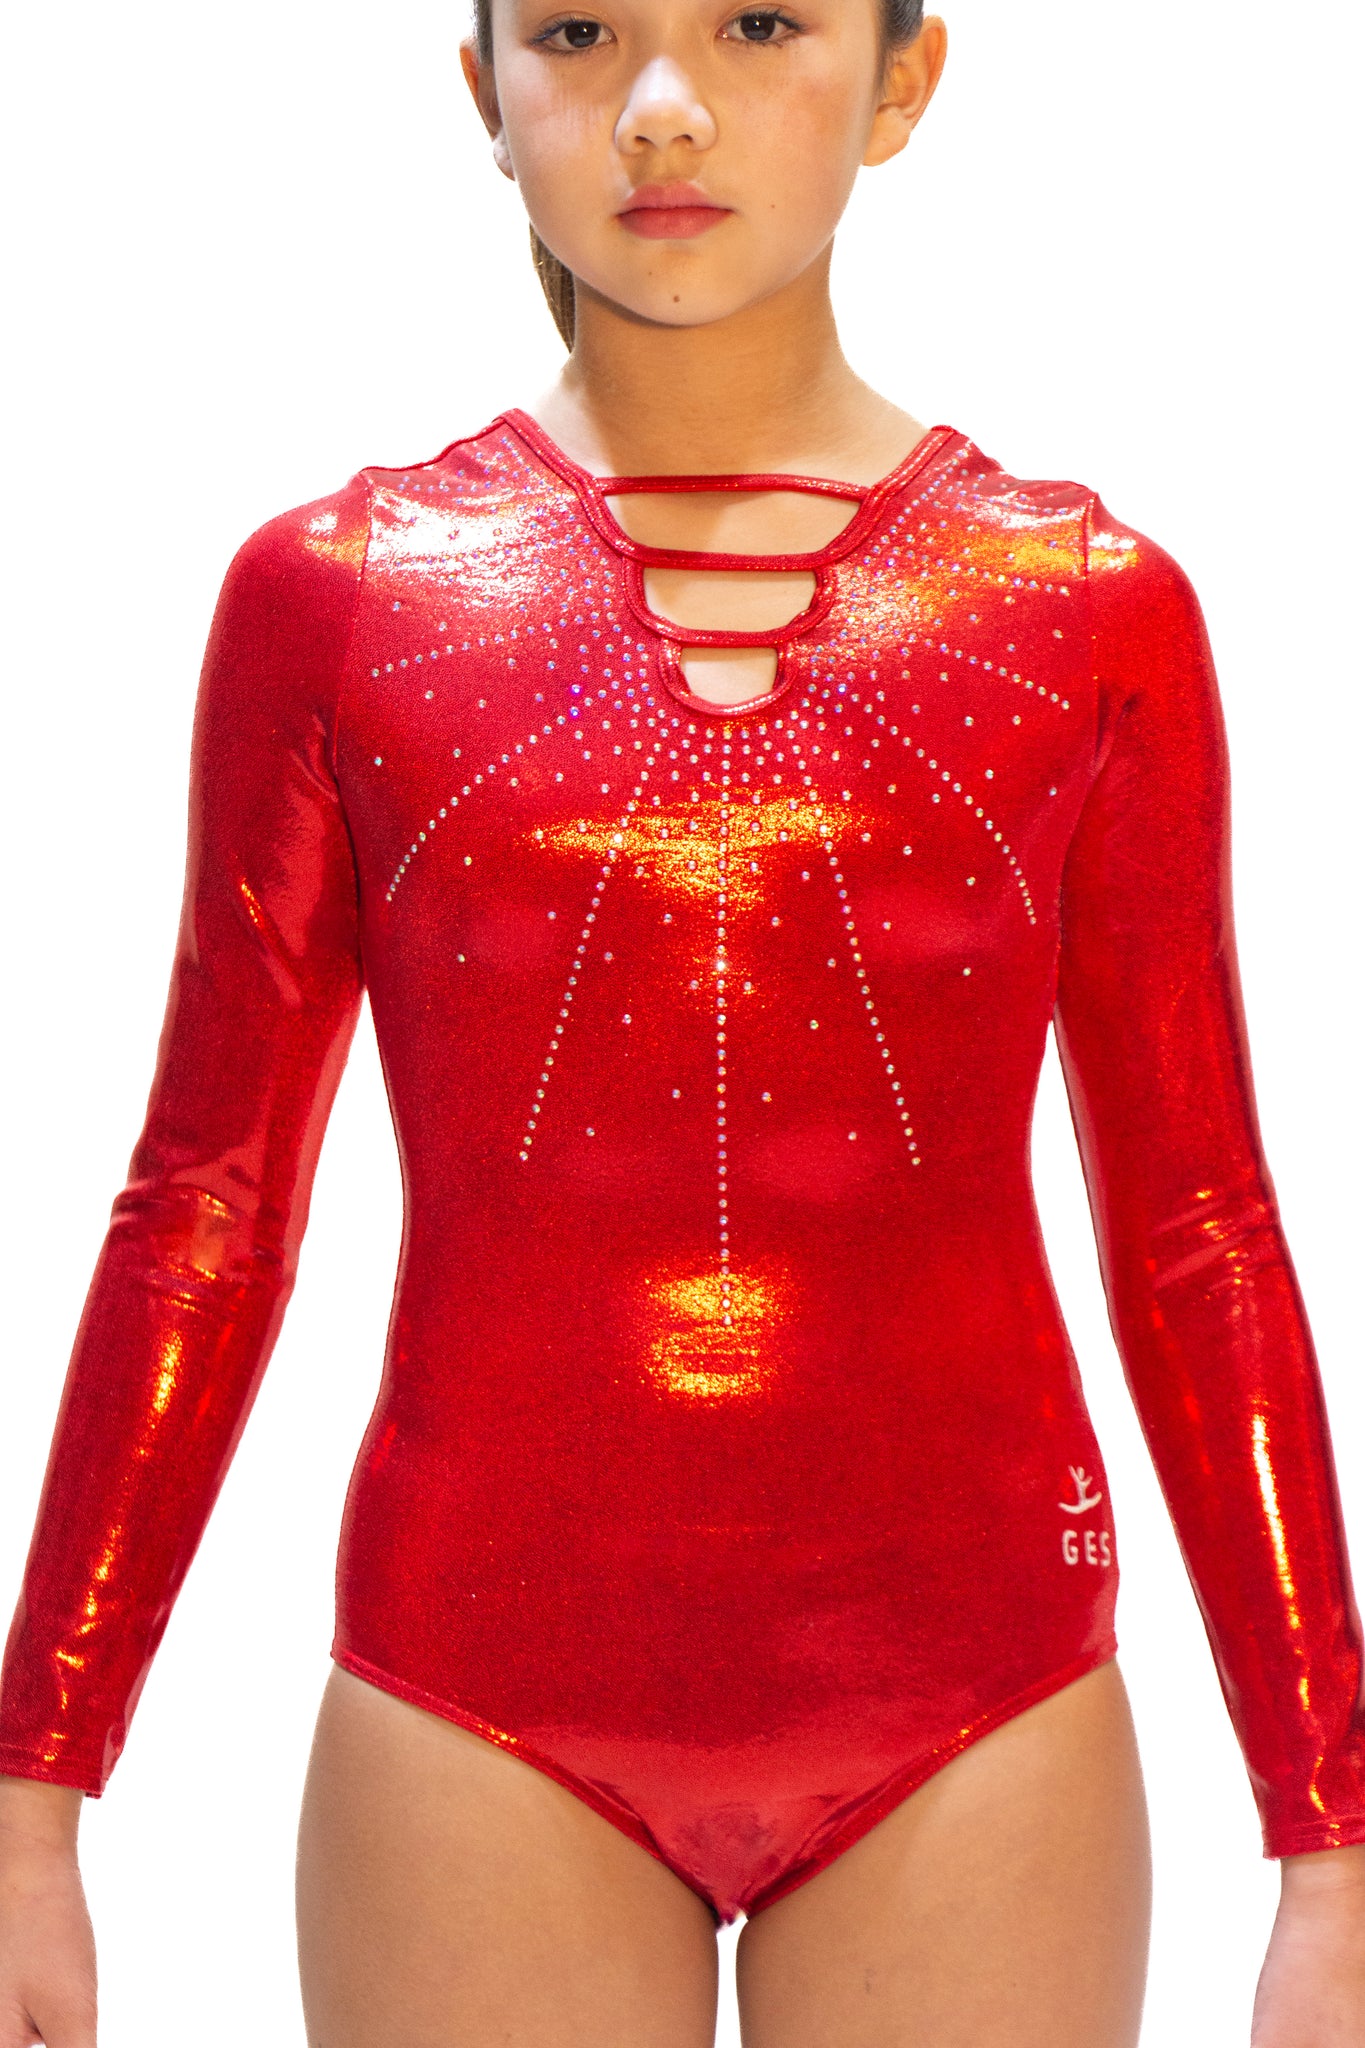 Aldebaran Red Long Sleeves Girl Gymnastics Leotard